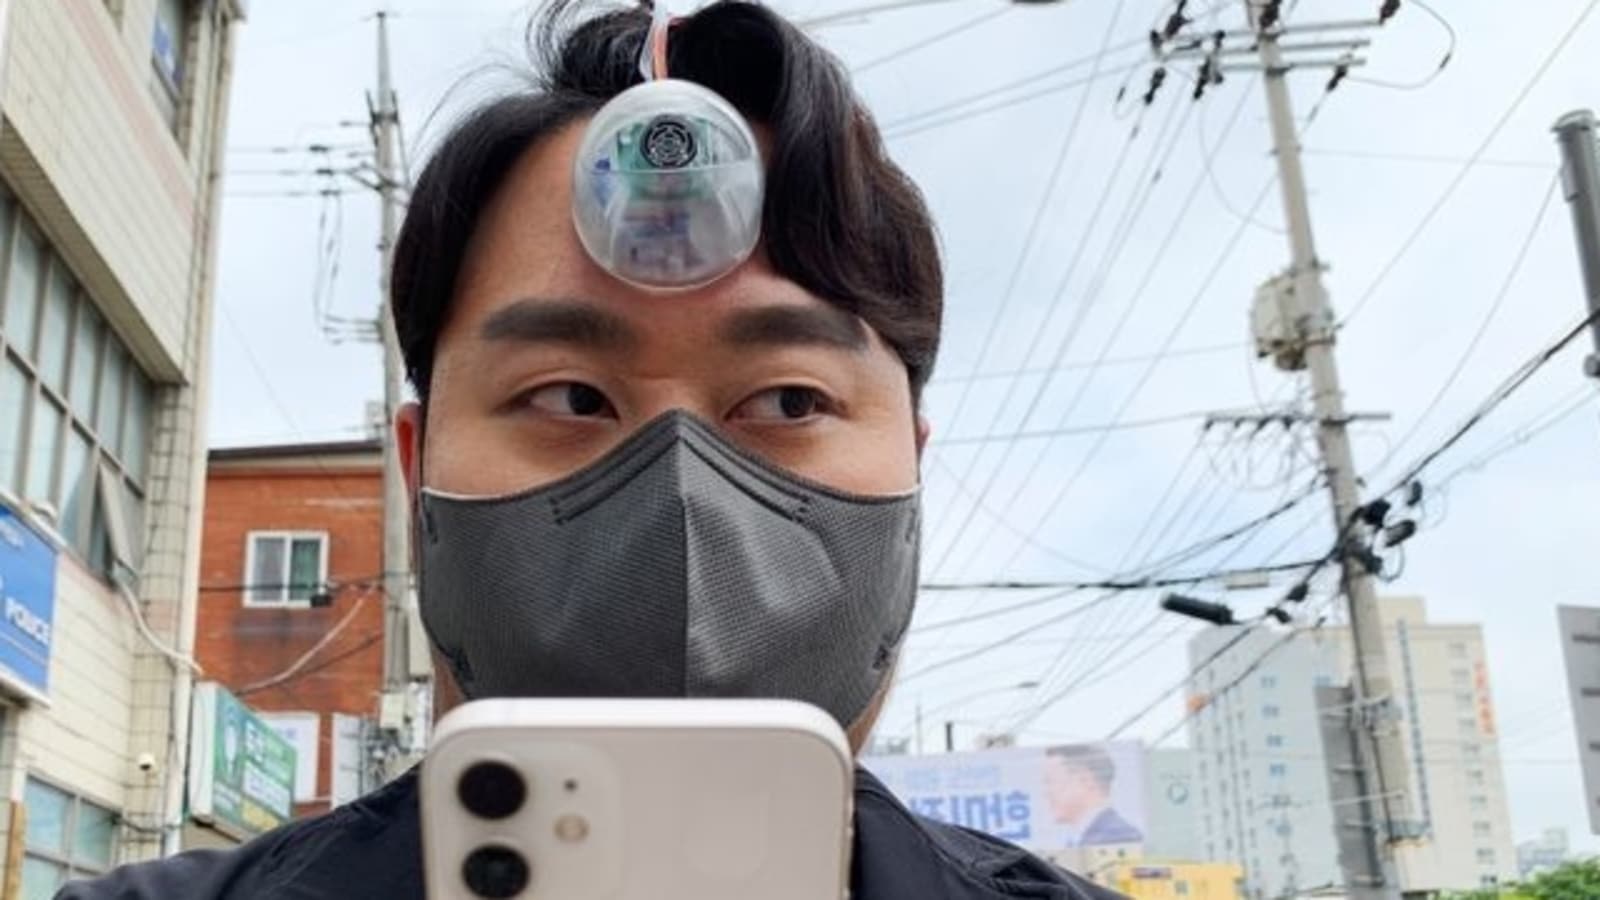 South Korean designer creates ‘Third Eye’ for 'smartphone zombies'